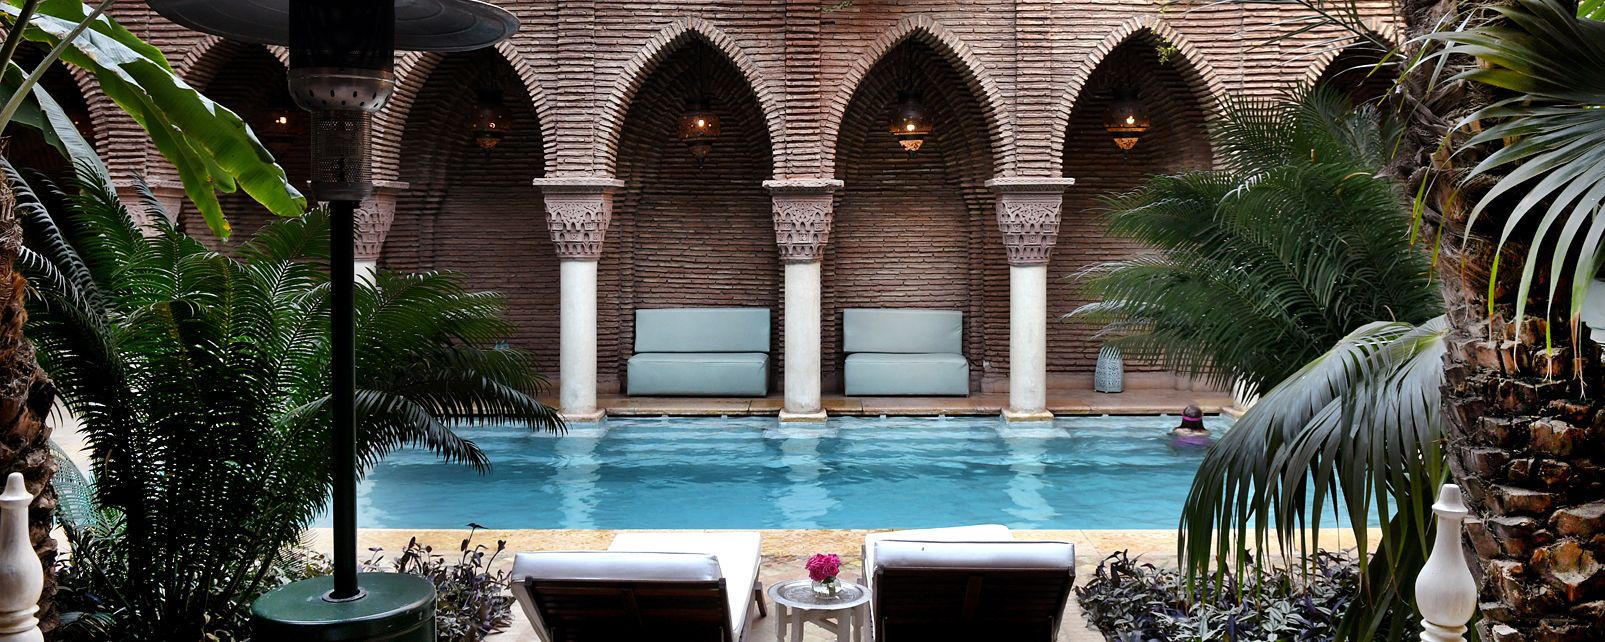 Hotel La Sultana Marrakech